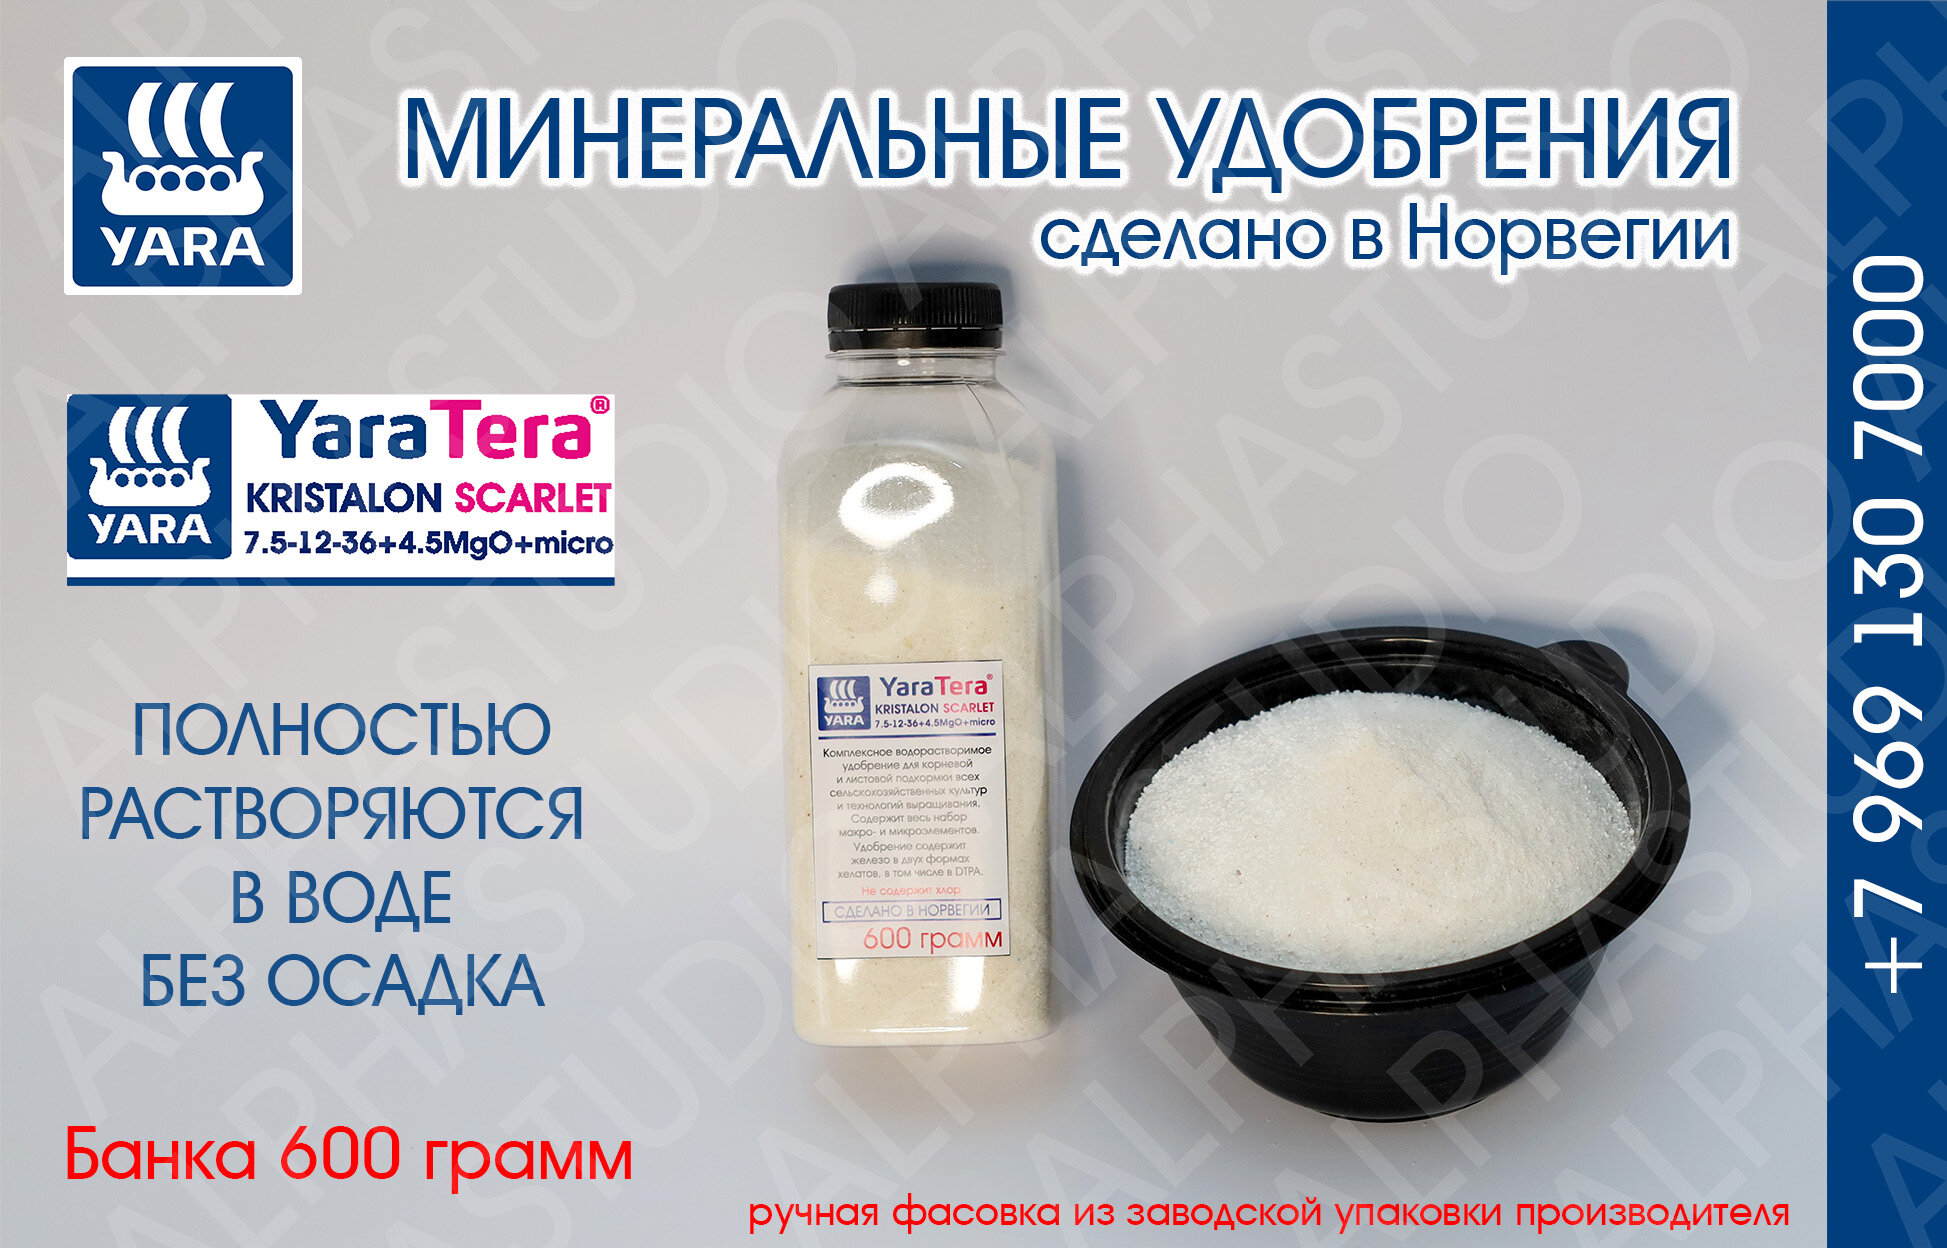 Минеральное удобрение YARA Tera Kristalon Scarlet 7.5-12-36+4.5Mg+micro. Банка 600 грамм